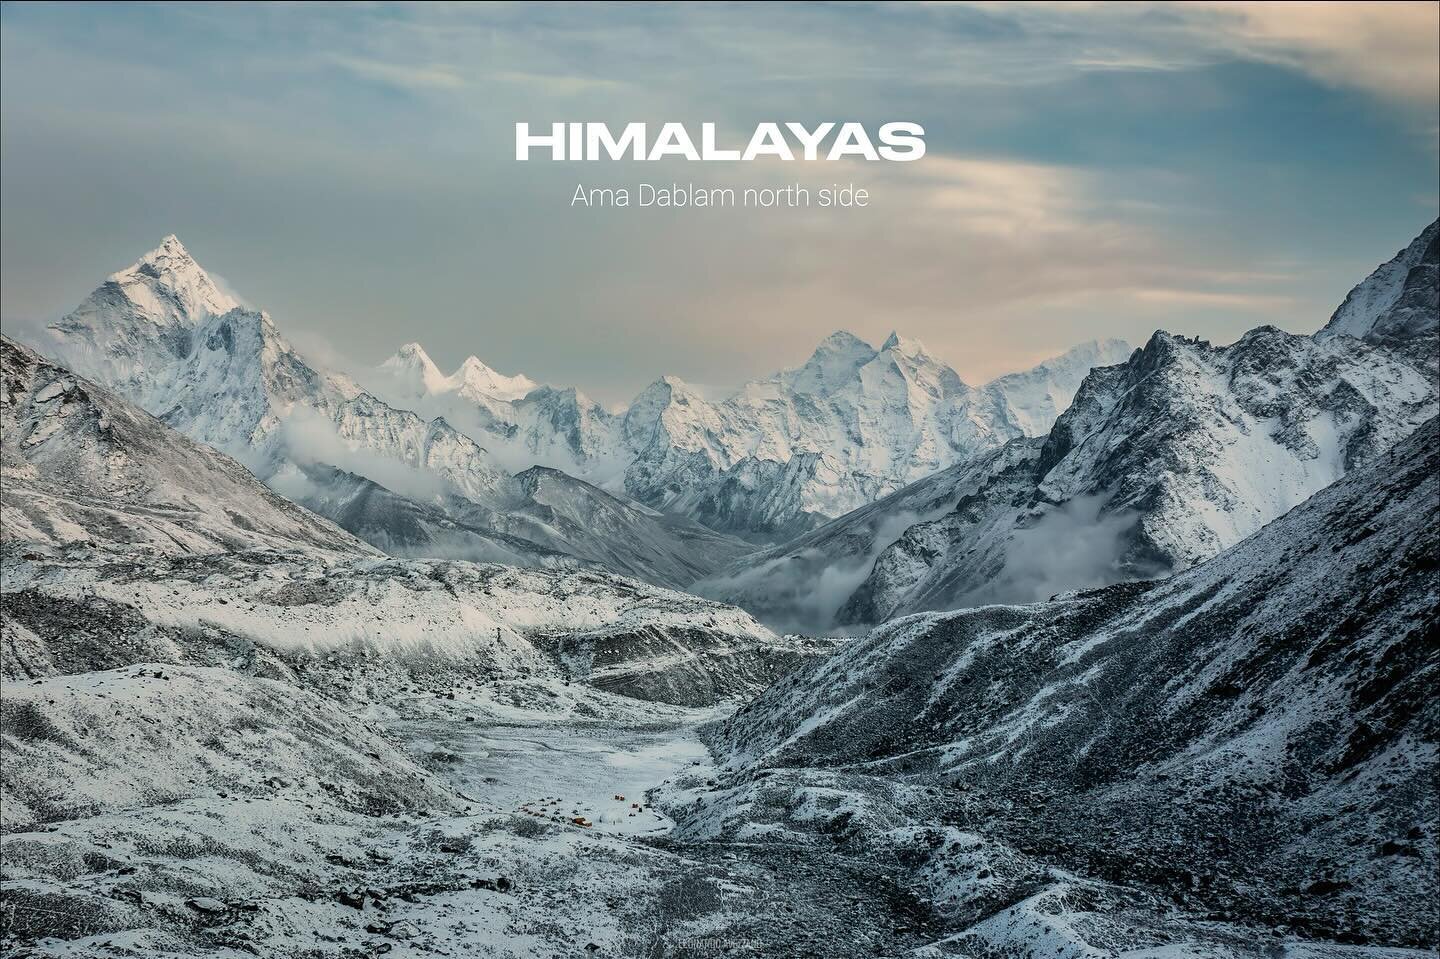 The breathtaking landscape of the Himalayas.
On the left the majestic Ama Dablam.

#mountains #amadablam #adventure #himalayas #djinepal #nepal